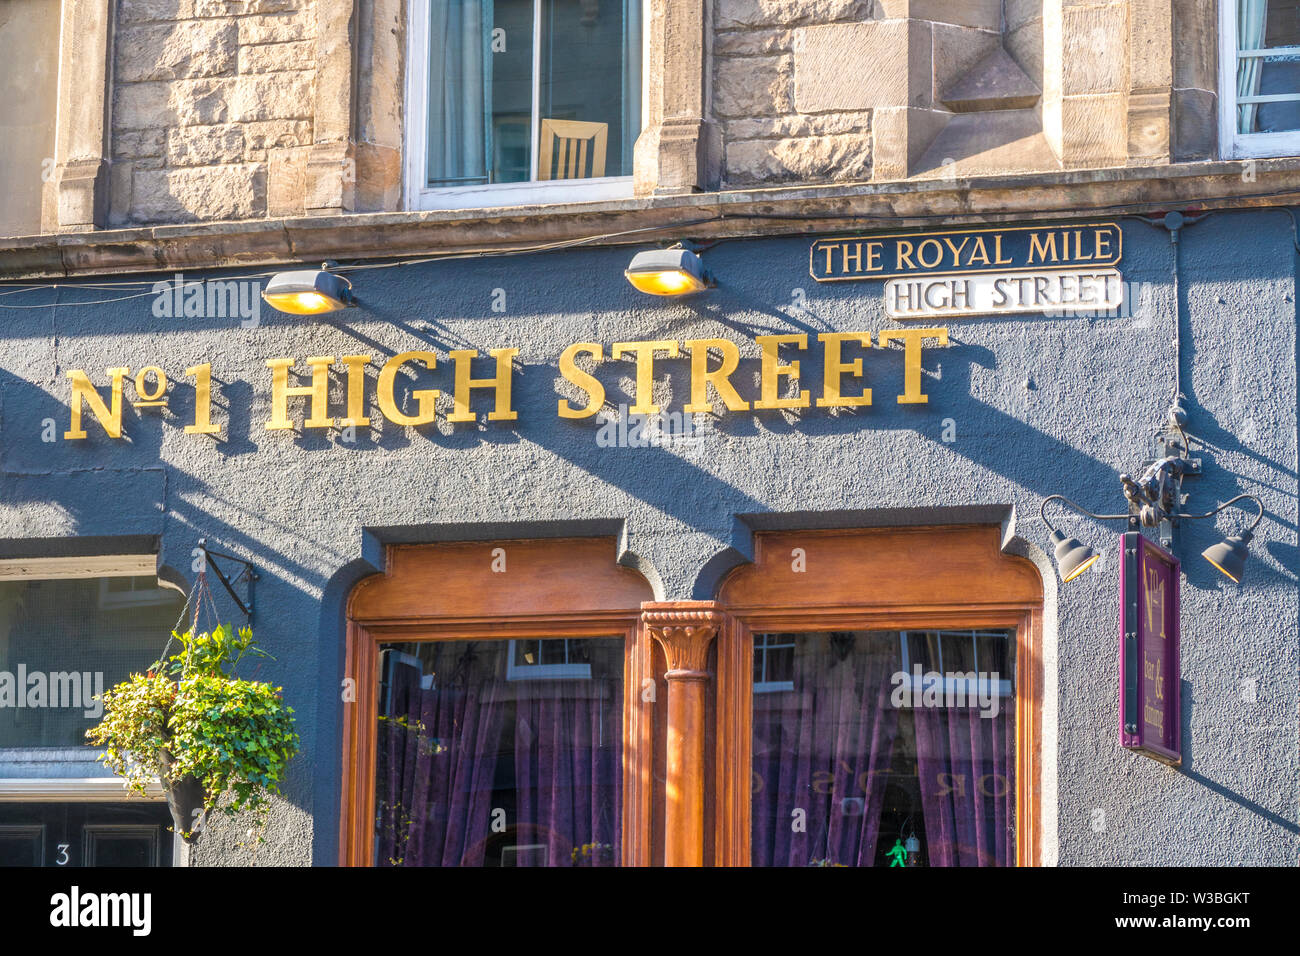 No. 1 High Street – a pub / bar / diner on the Royal Mile in Edinburgh. Scotland, UK. Stock Photo